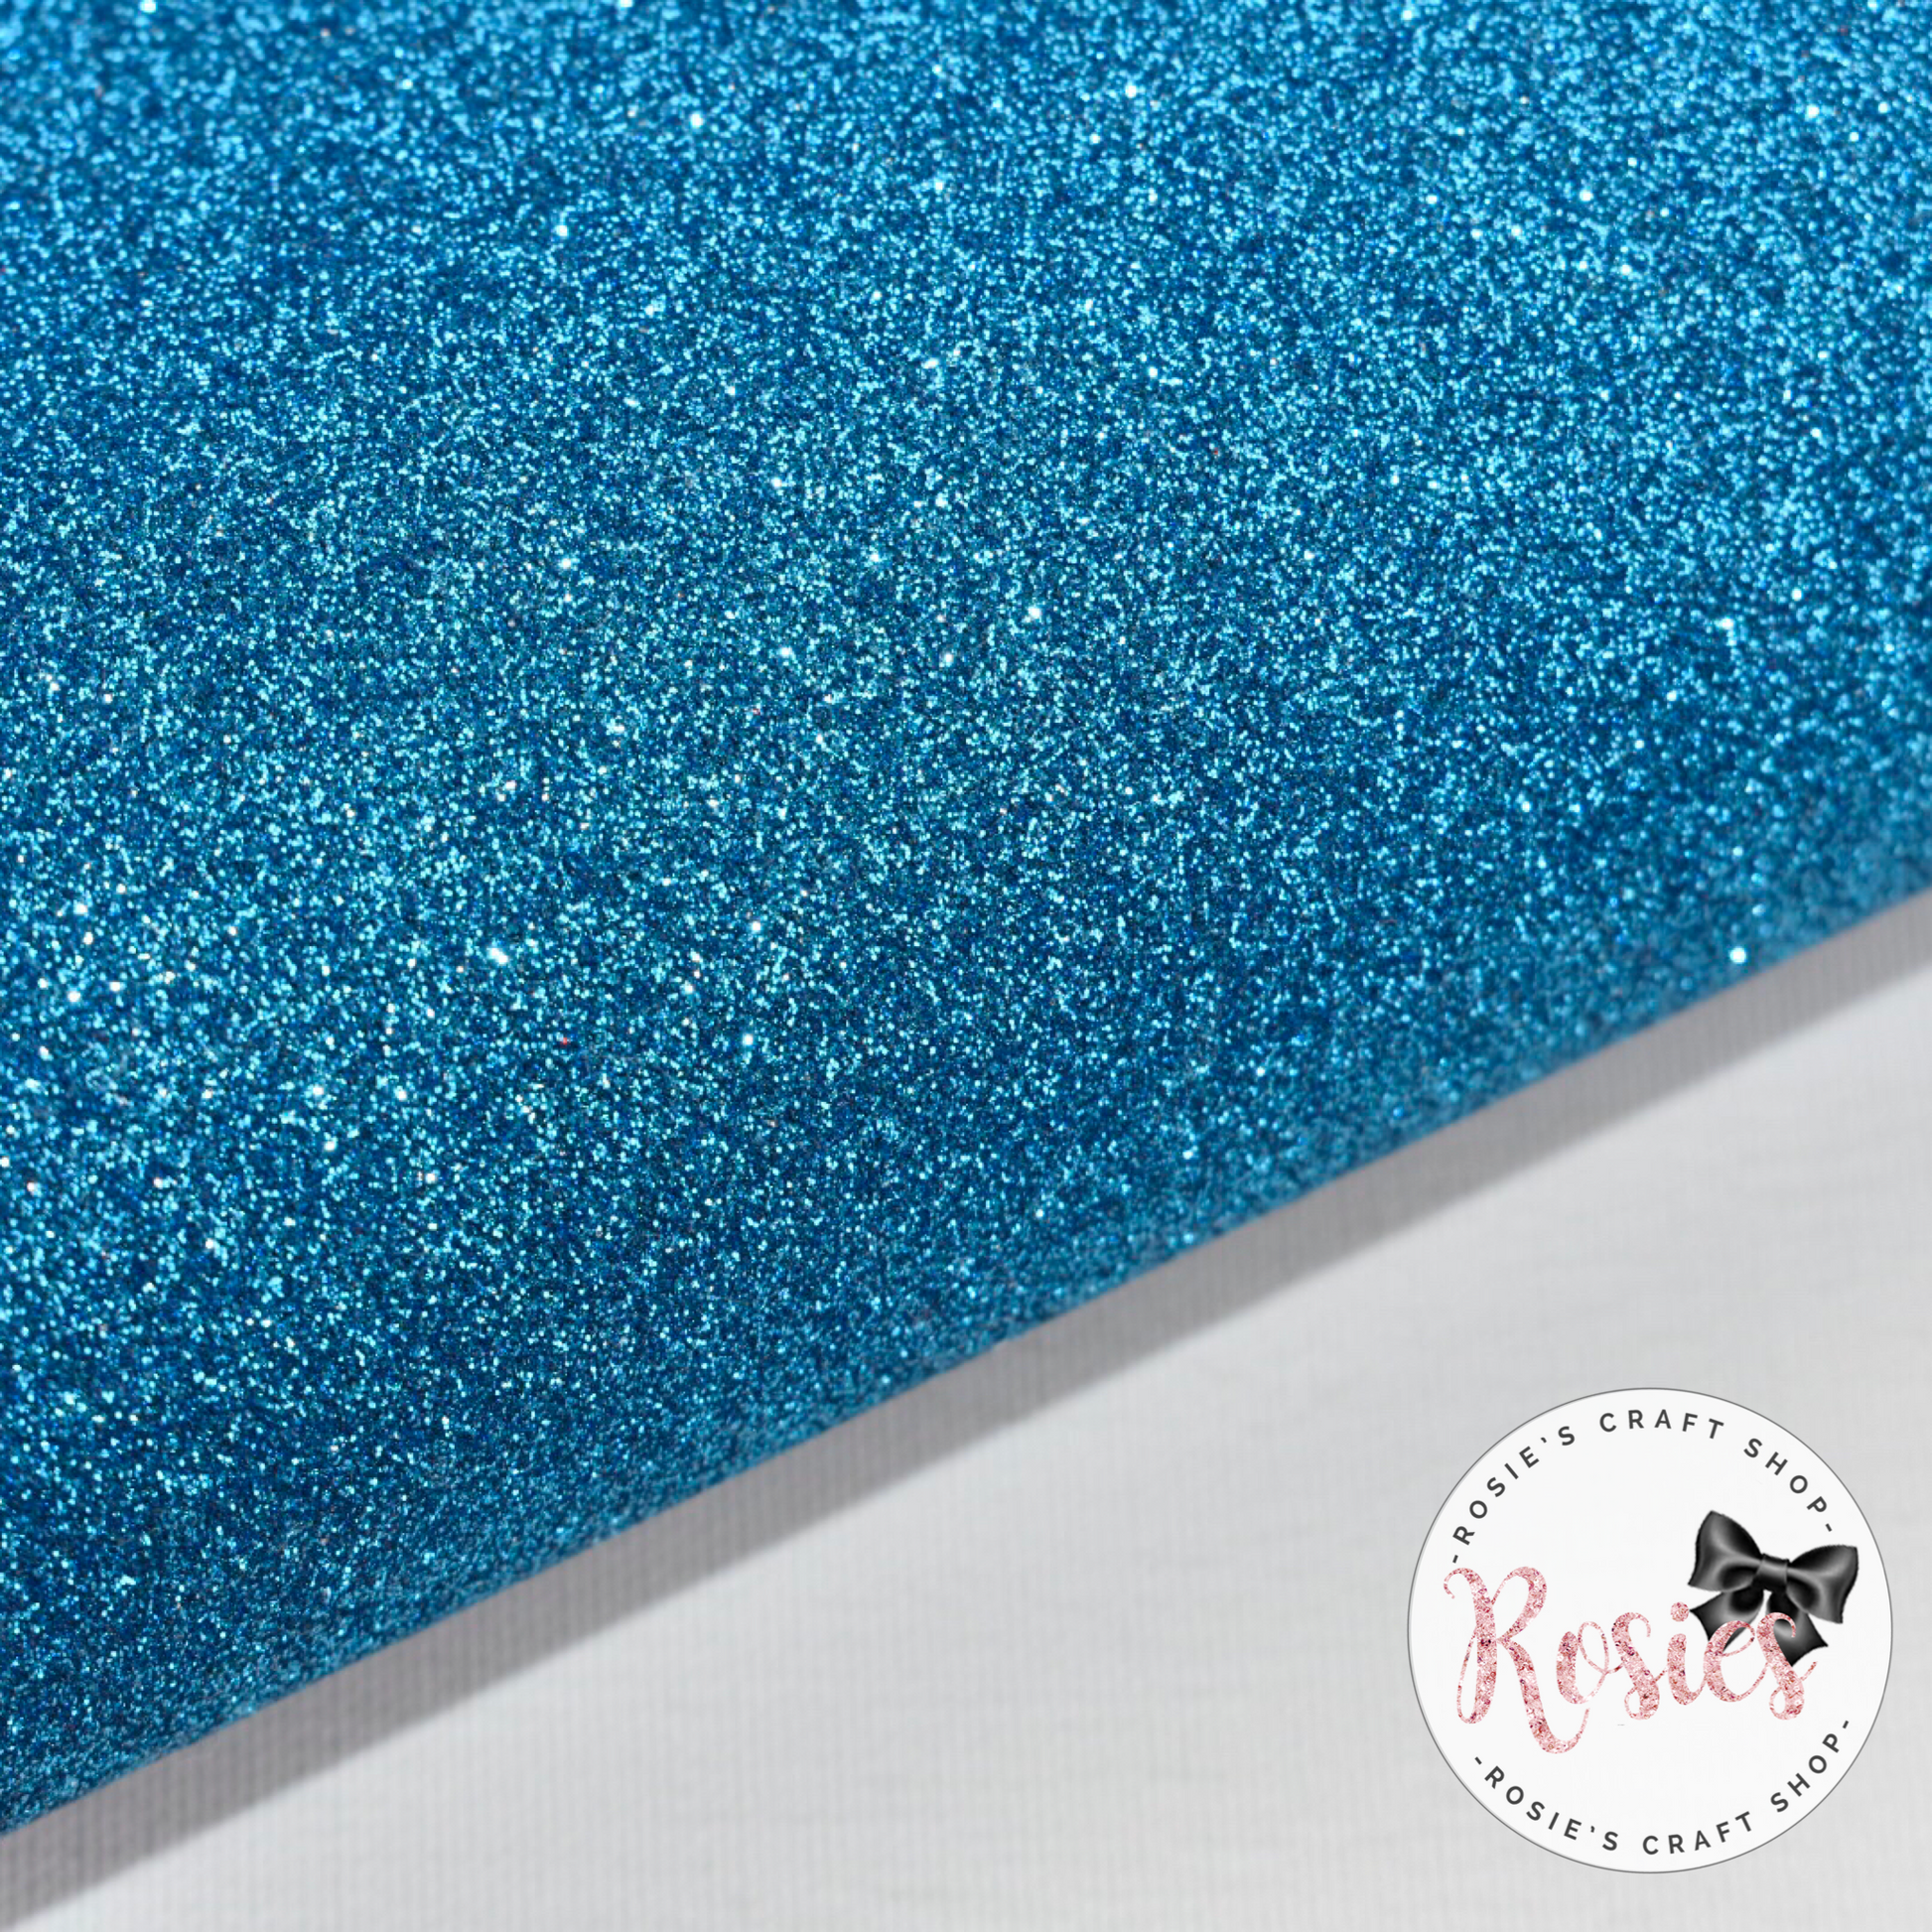 Aqua Premium Fine Glitter Topped Wool Felt - Rosie's Craft Shop Ltd